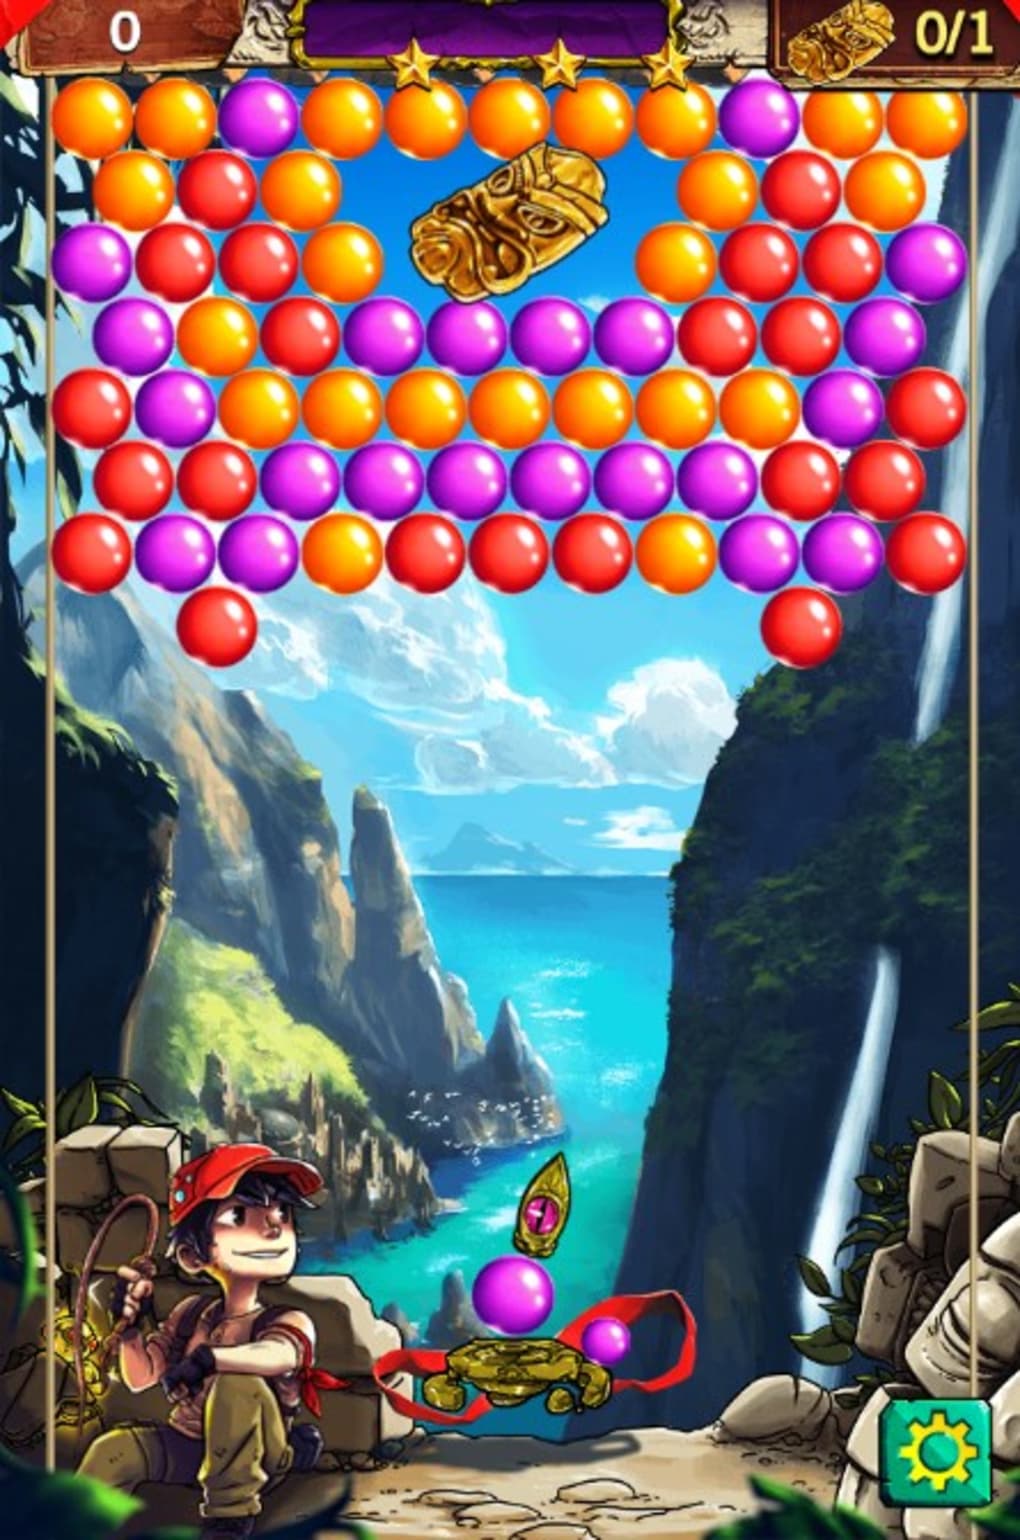 Bubble Shooter Game 3 Level 41 - 45 🏆 ( Best Bubble Pop Game ) 